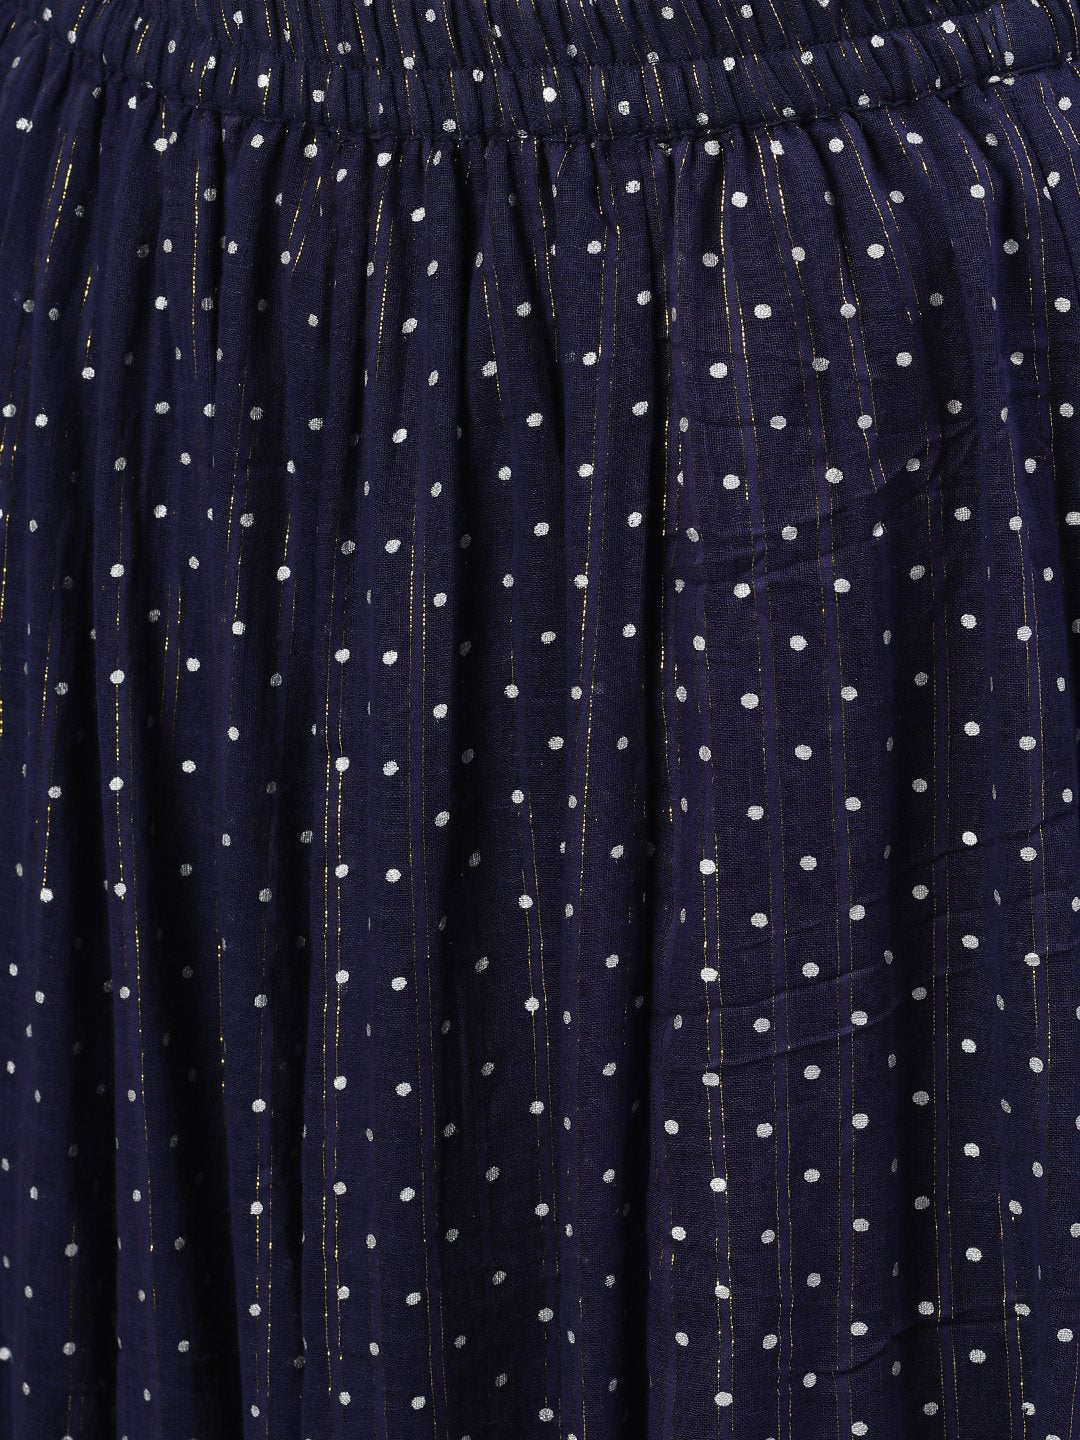 Women's Navy Blue Polka Dot Printed Maxi Skirt - Nayo Clothing